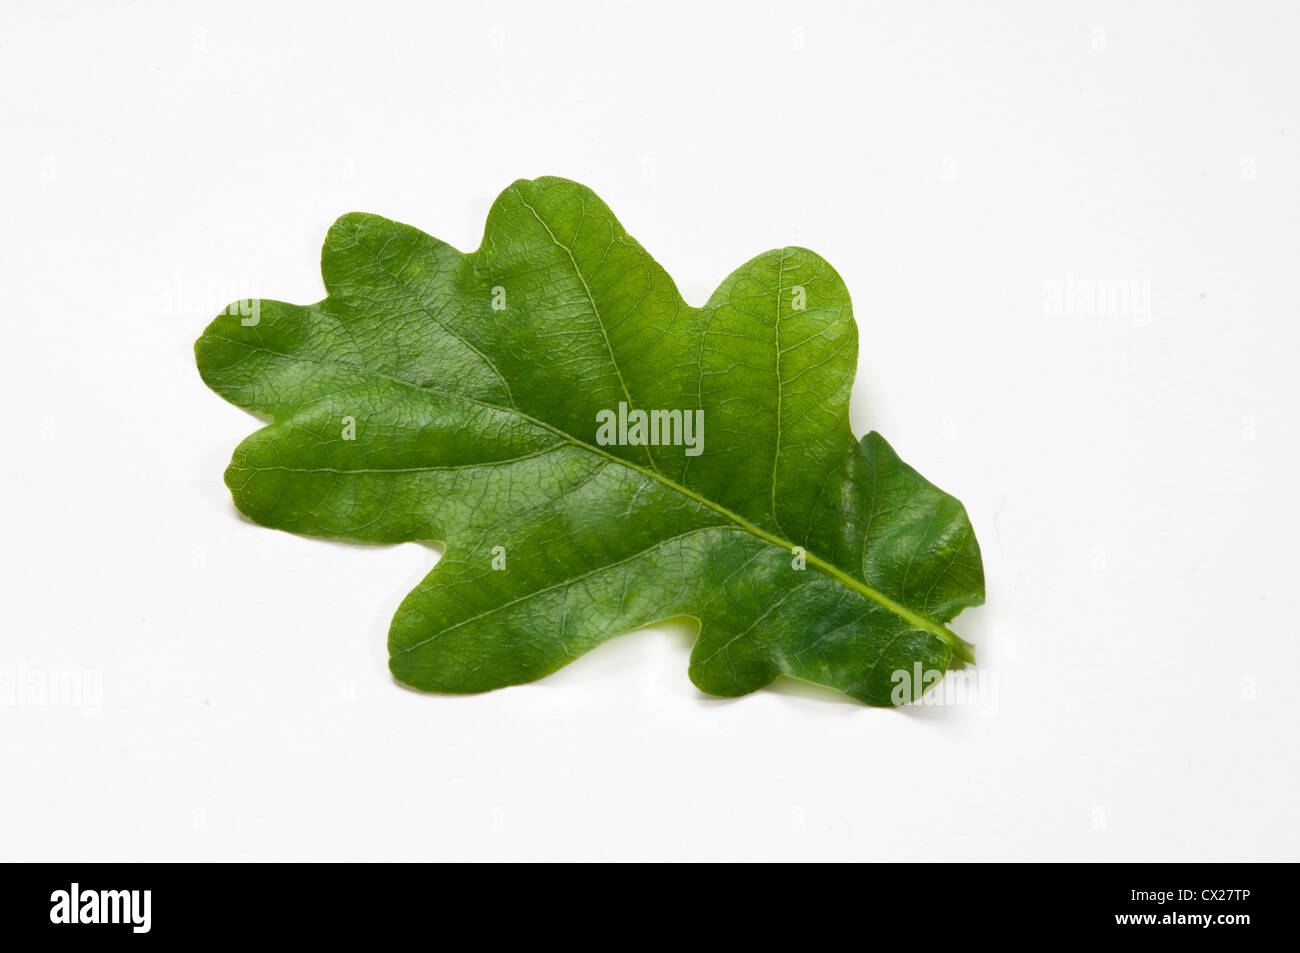 A single green Oak leaf on a clean white background Stock Photo